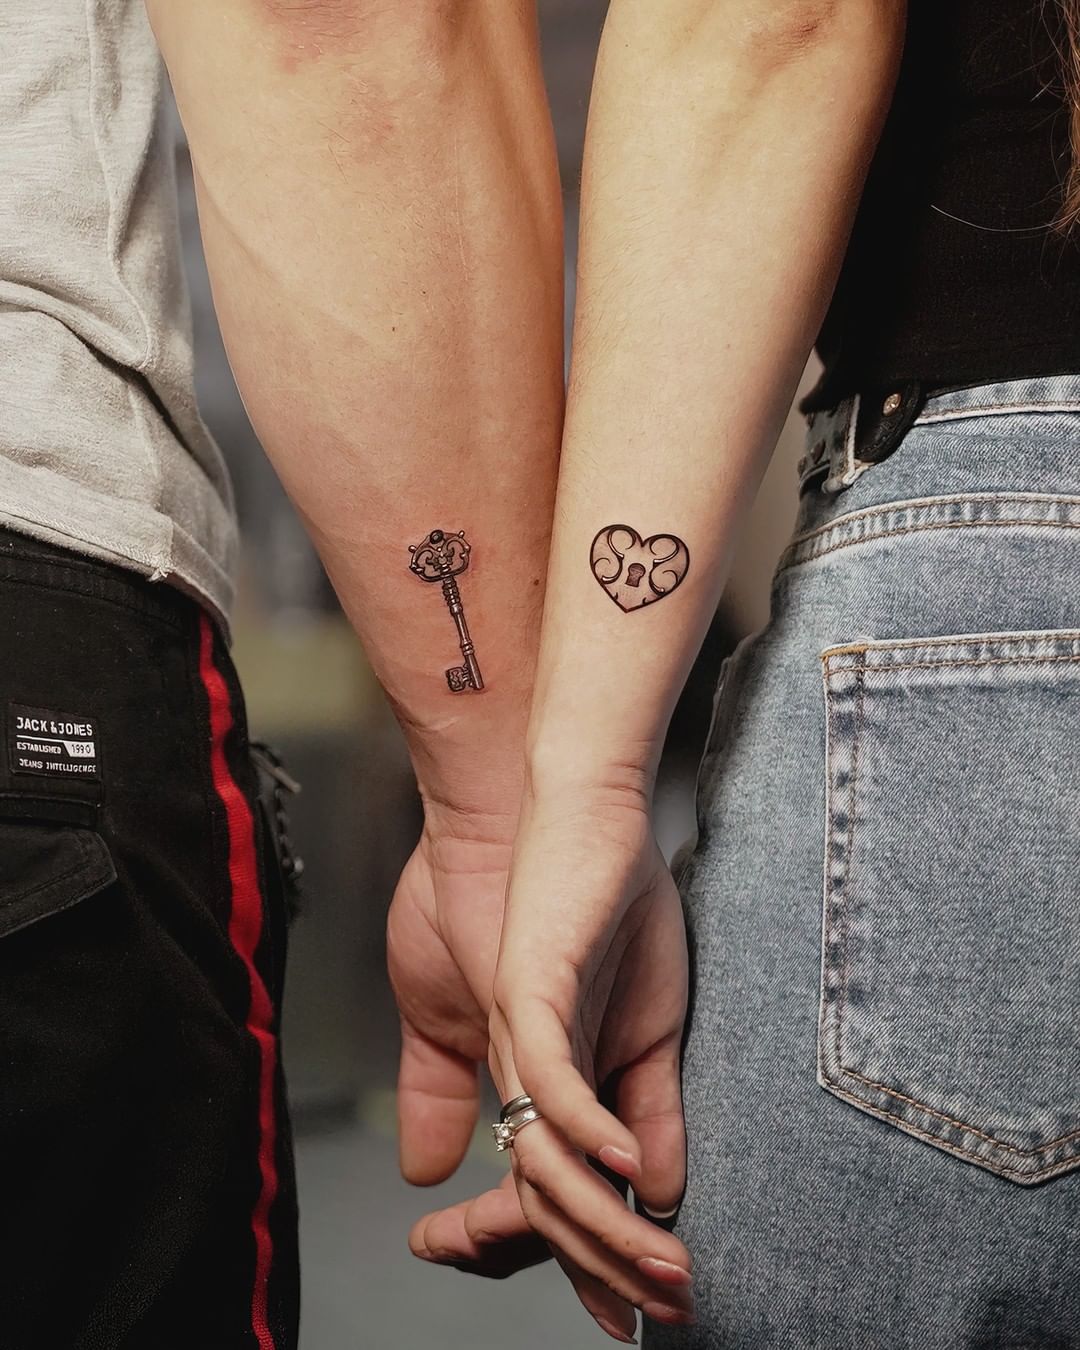 Matching Tattoo Ideas | POPSUGAR Love & Sex